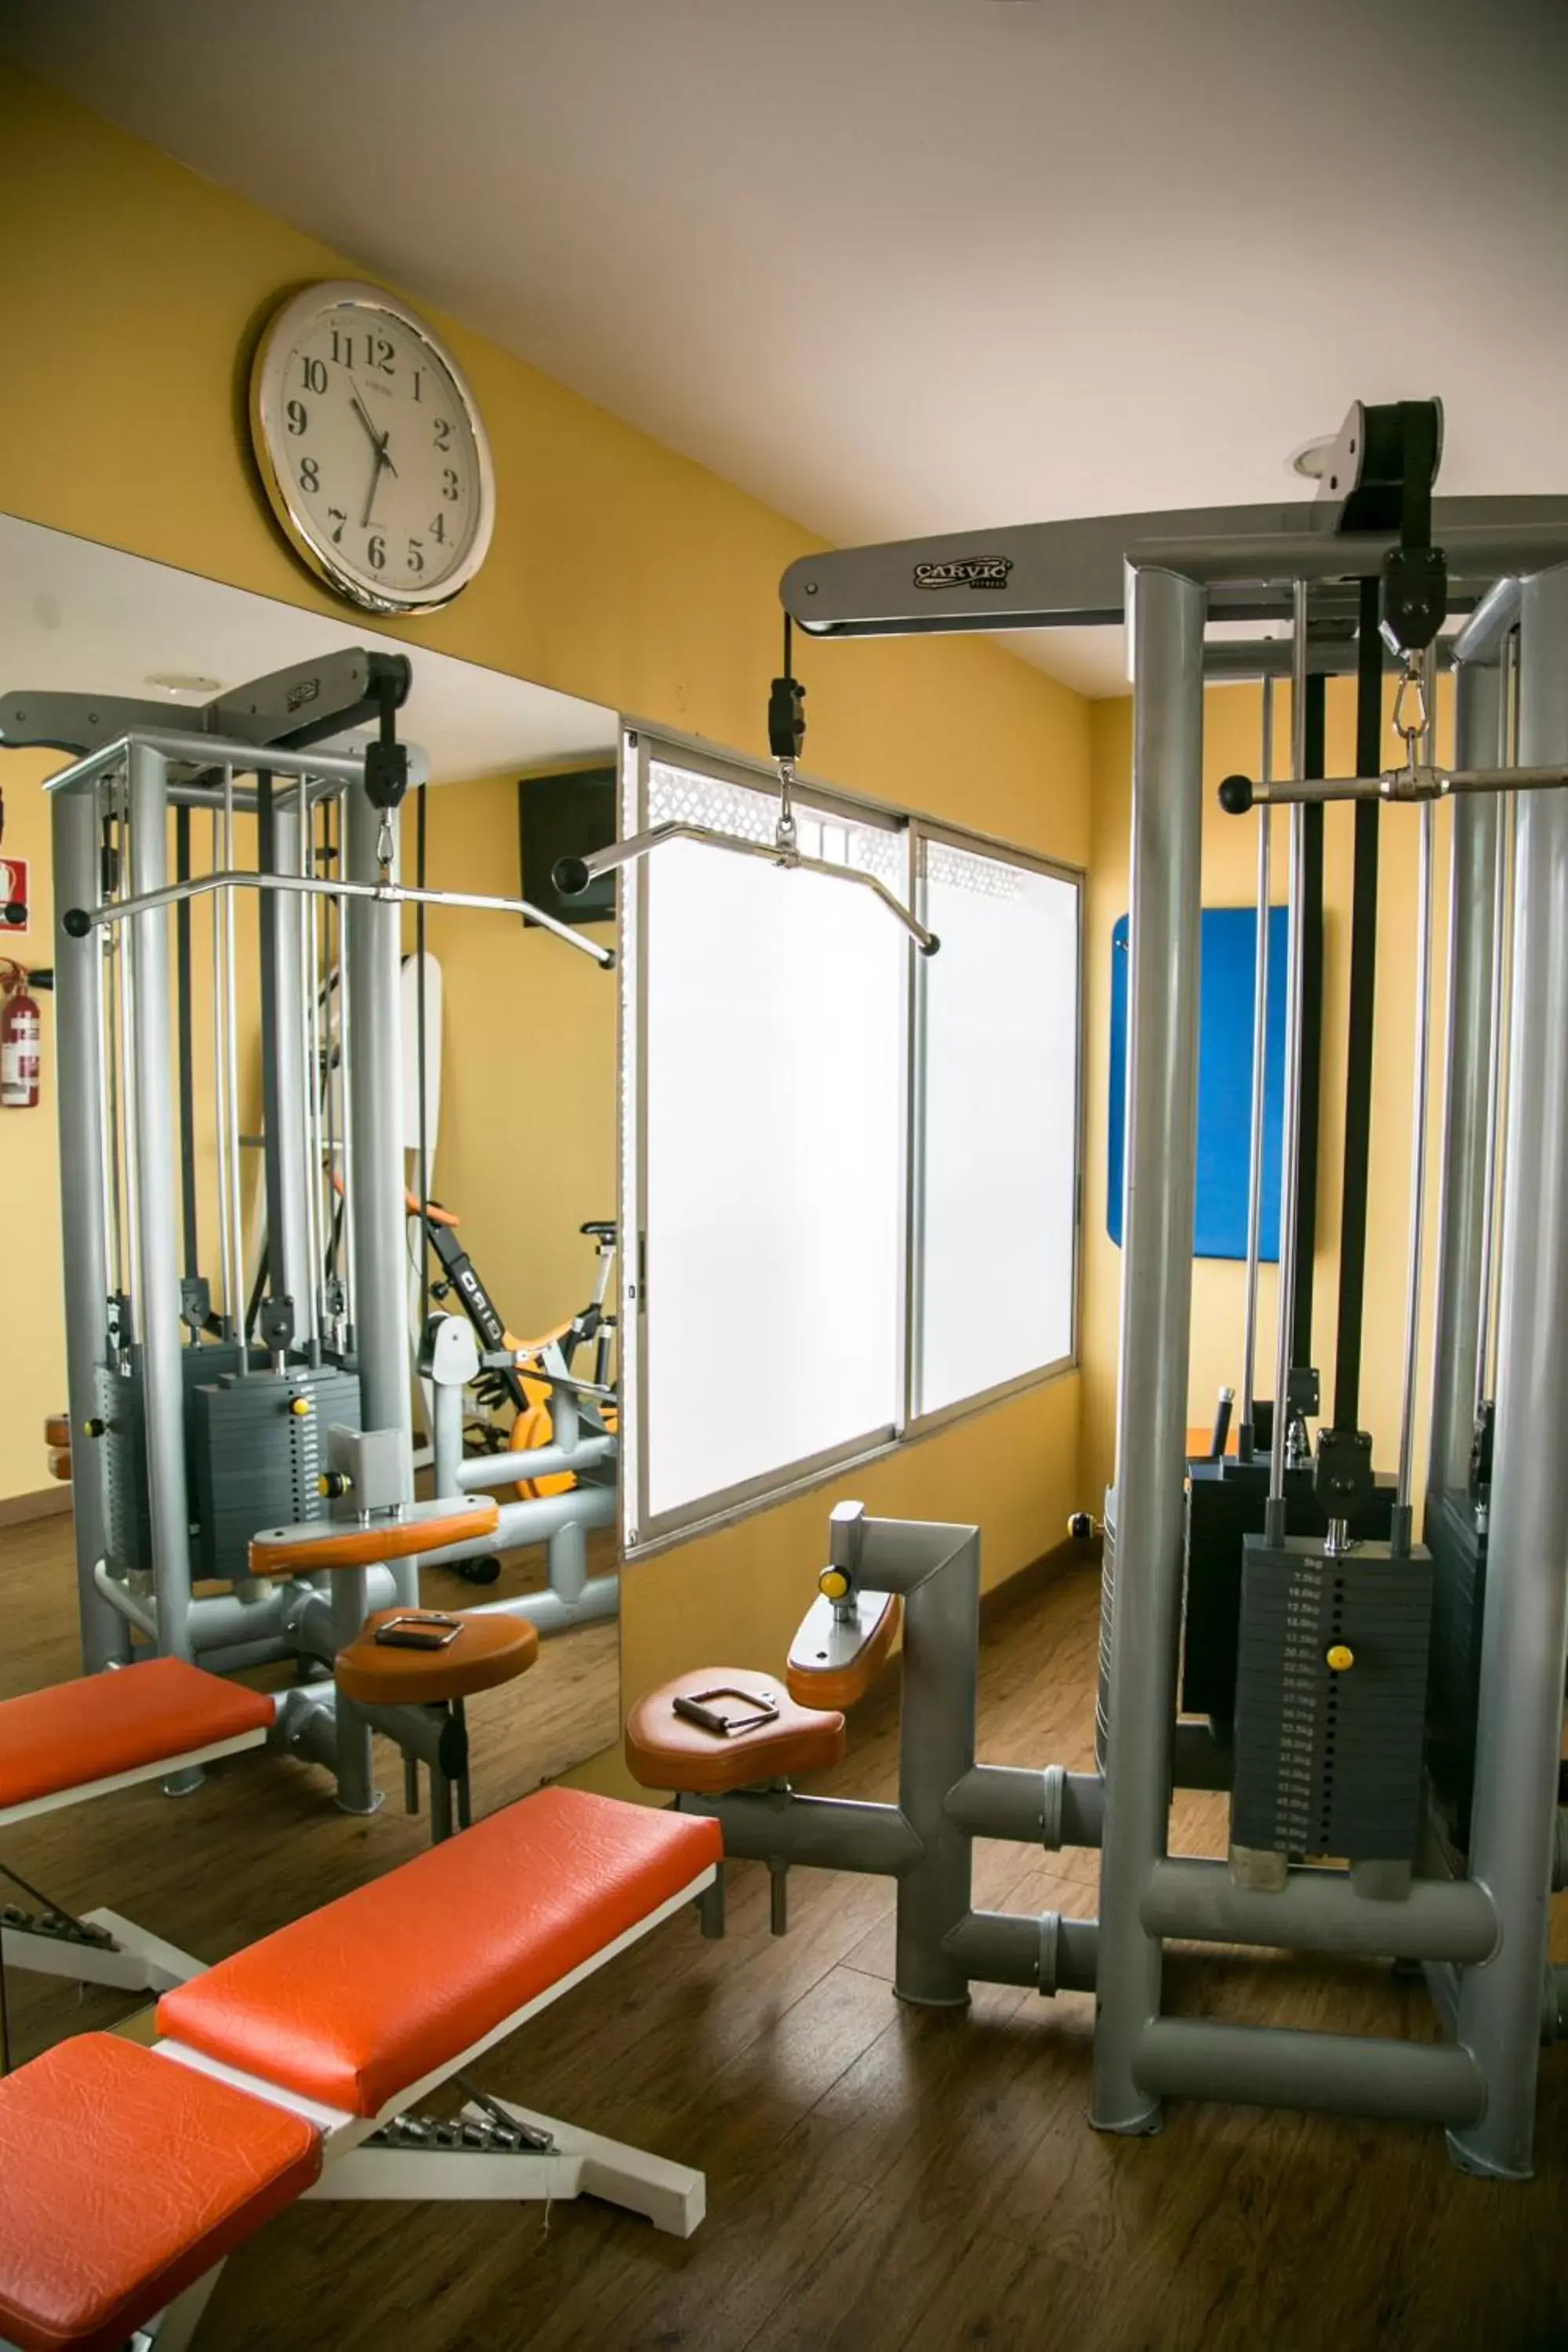 Fitness centre/facilities, Fitness Center/Facilities in Los Cantaros